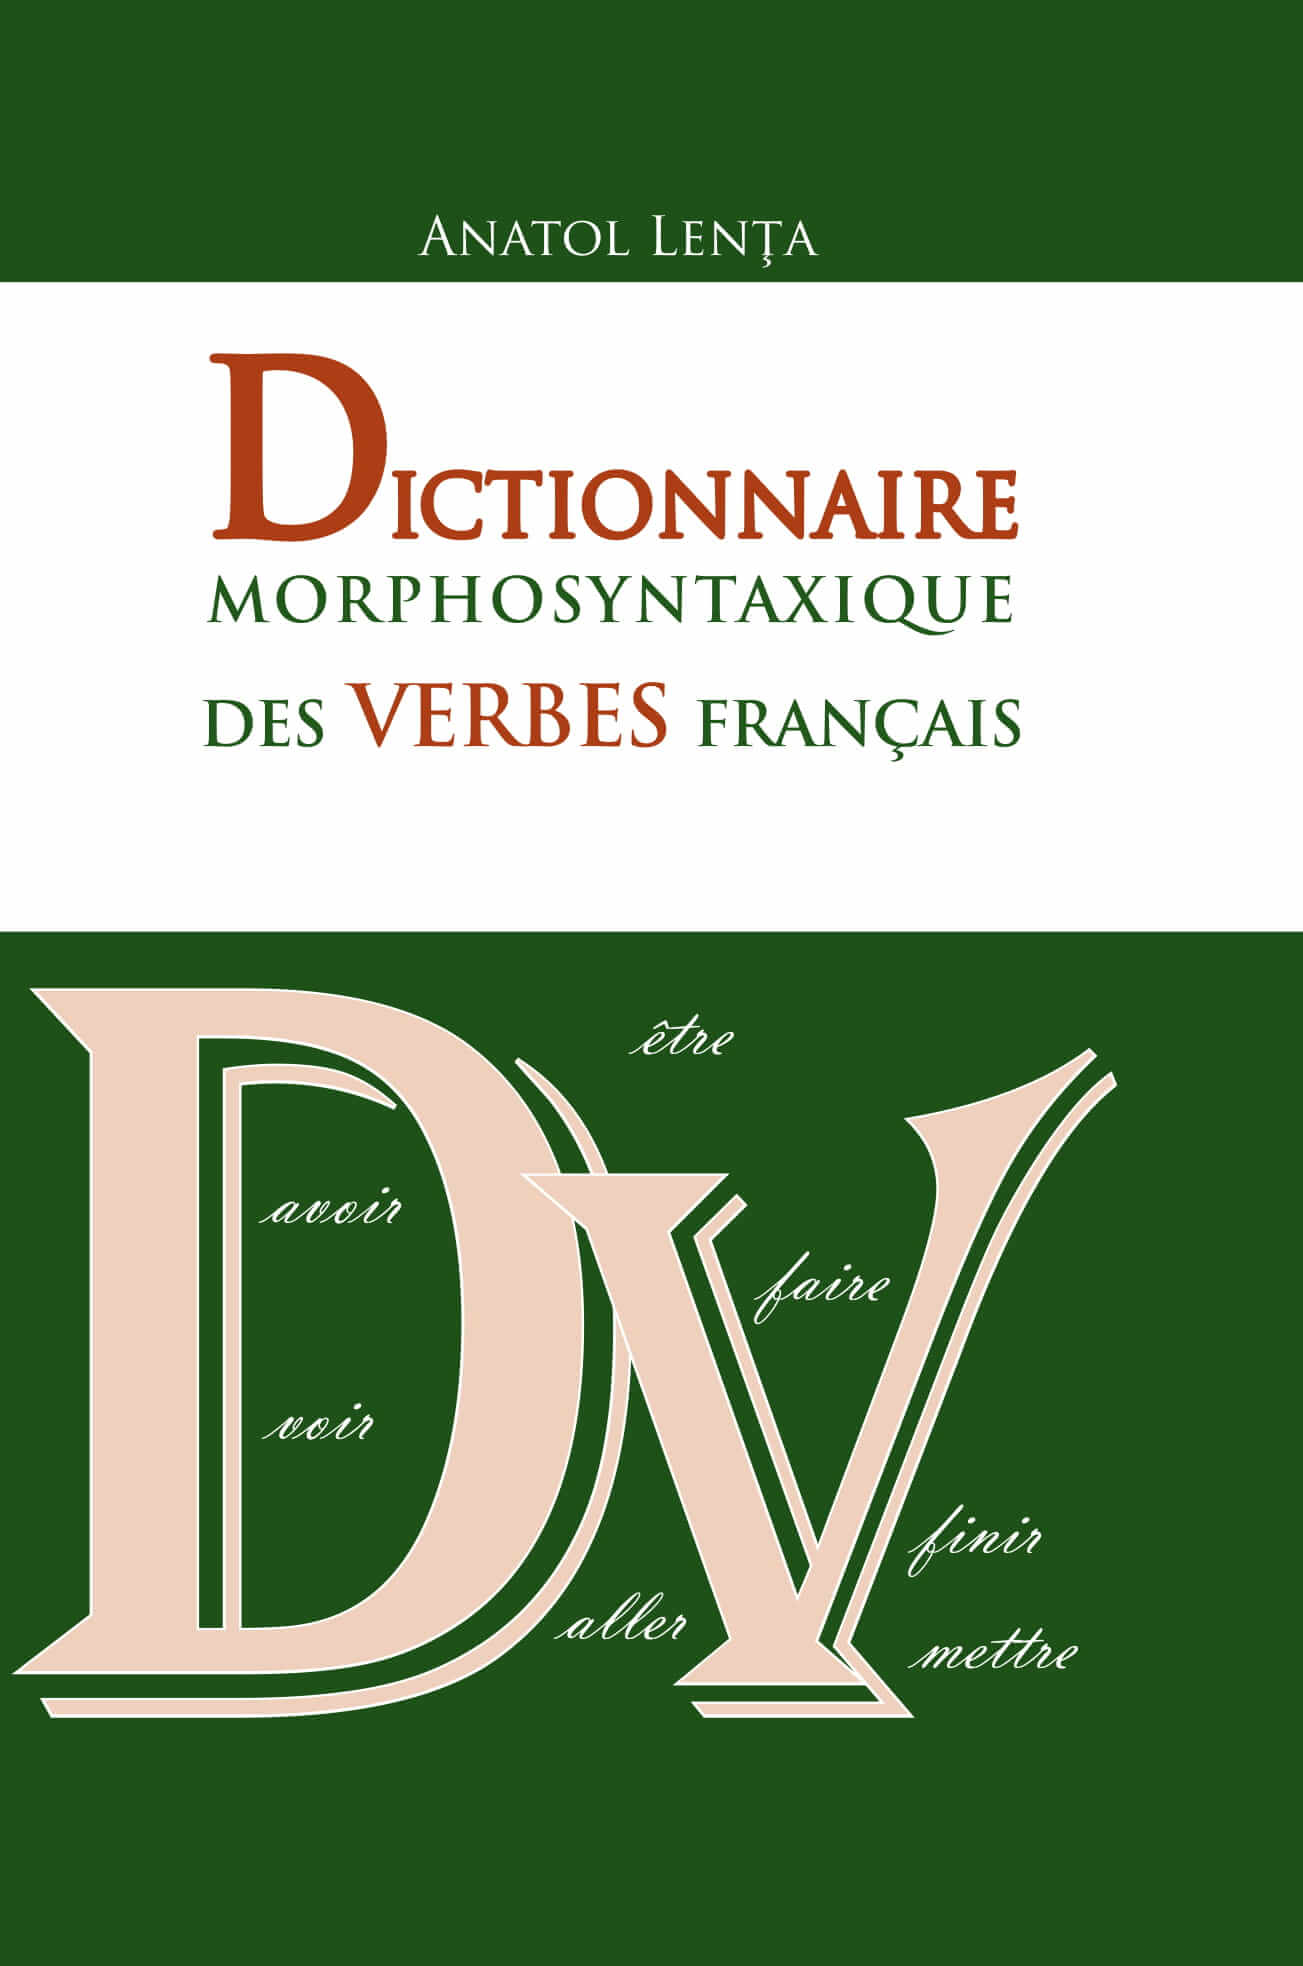 Dictionnaire morphosyntaxique des verbes francais de Anatol Lenta